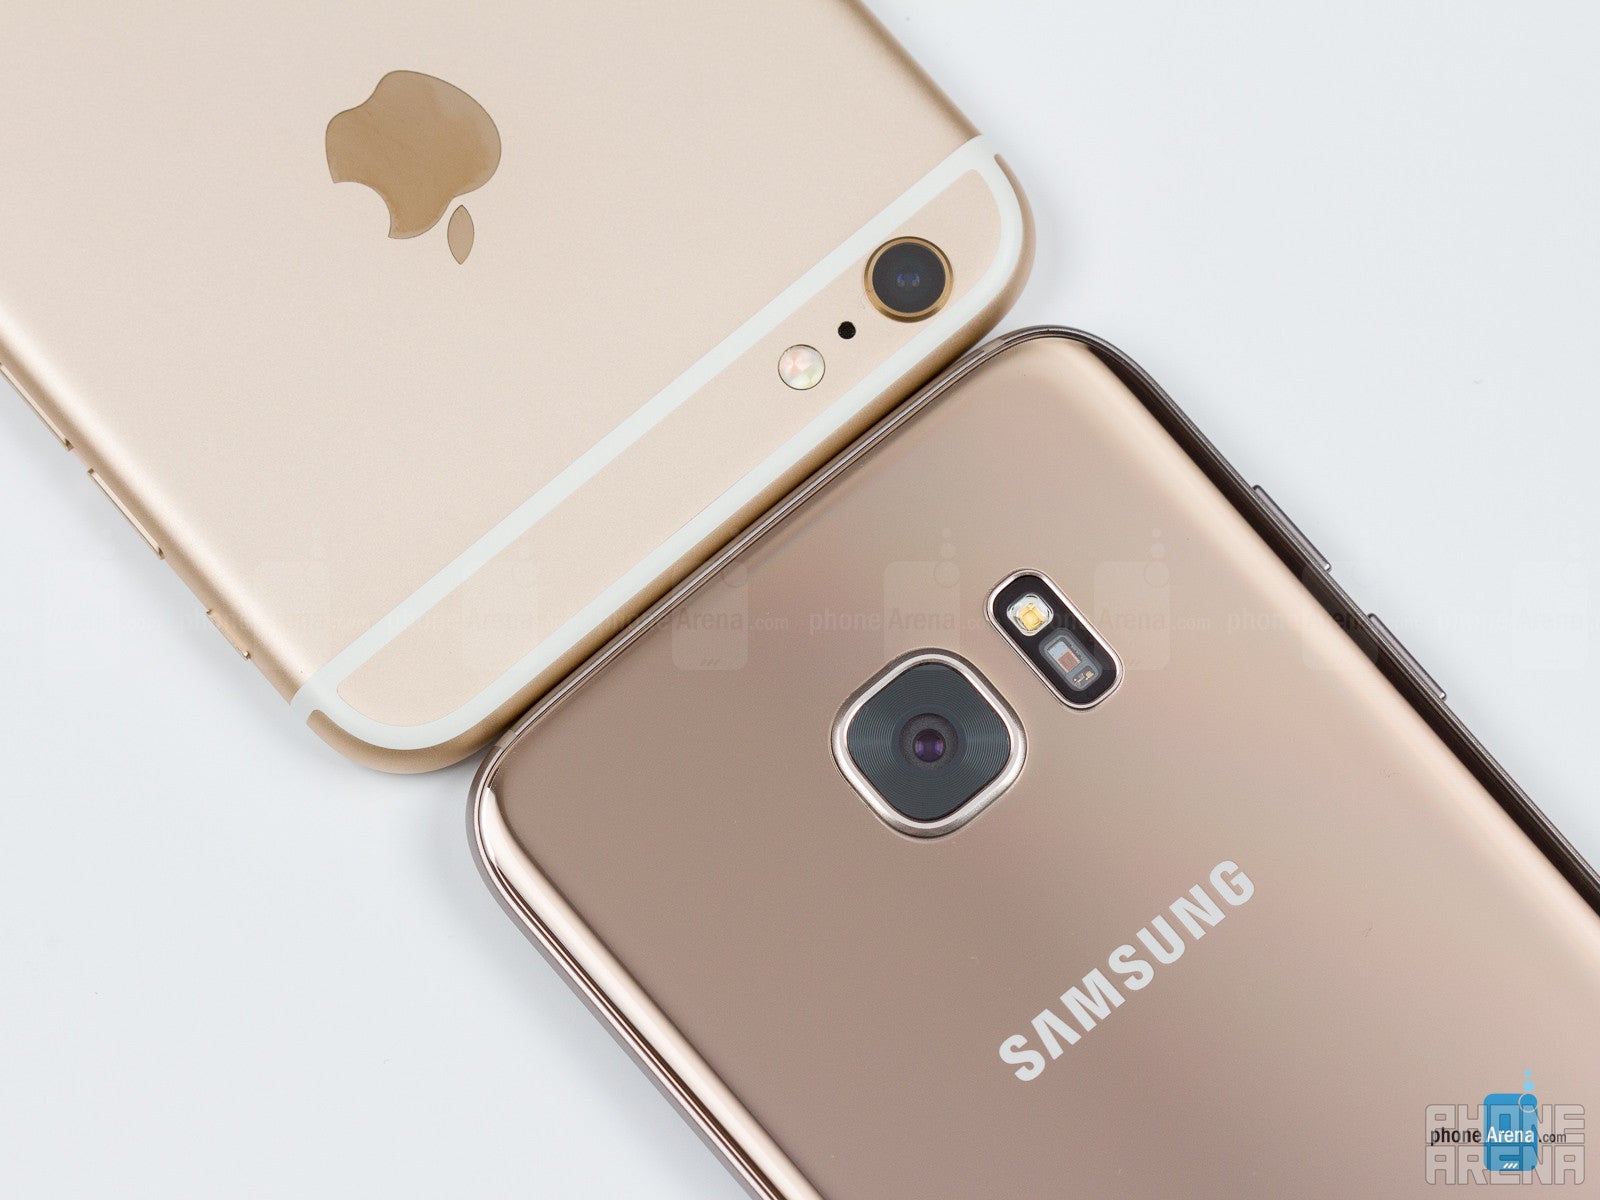 Samsung Galaxy S7 edge vs Apple iPhone 6s Plus